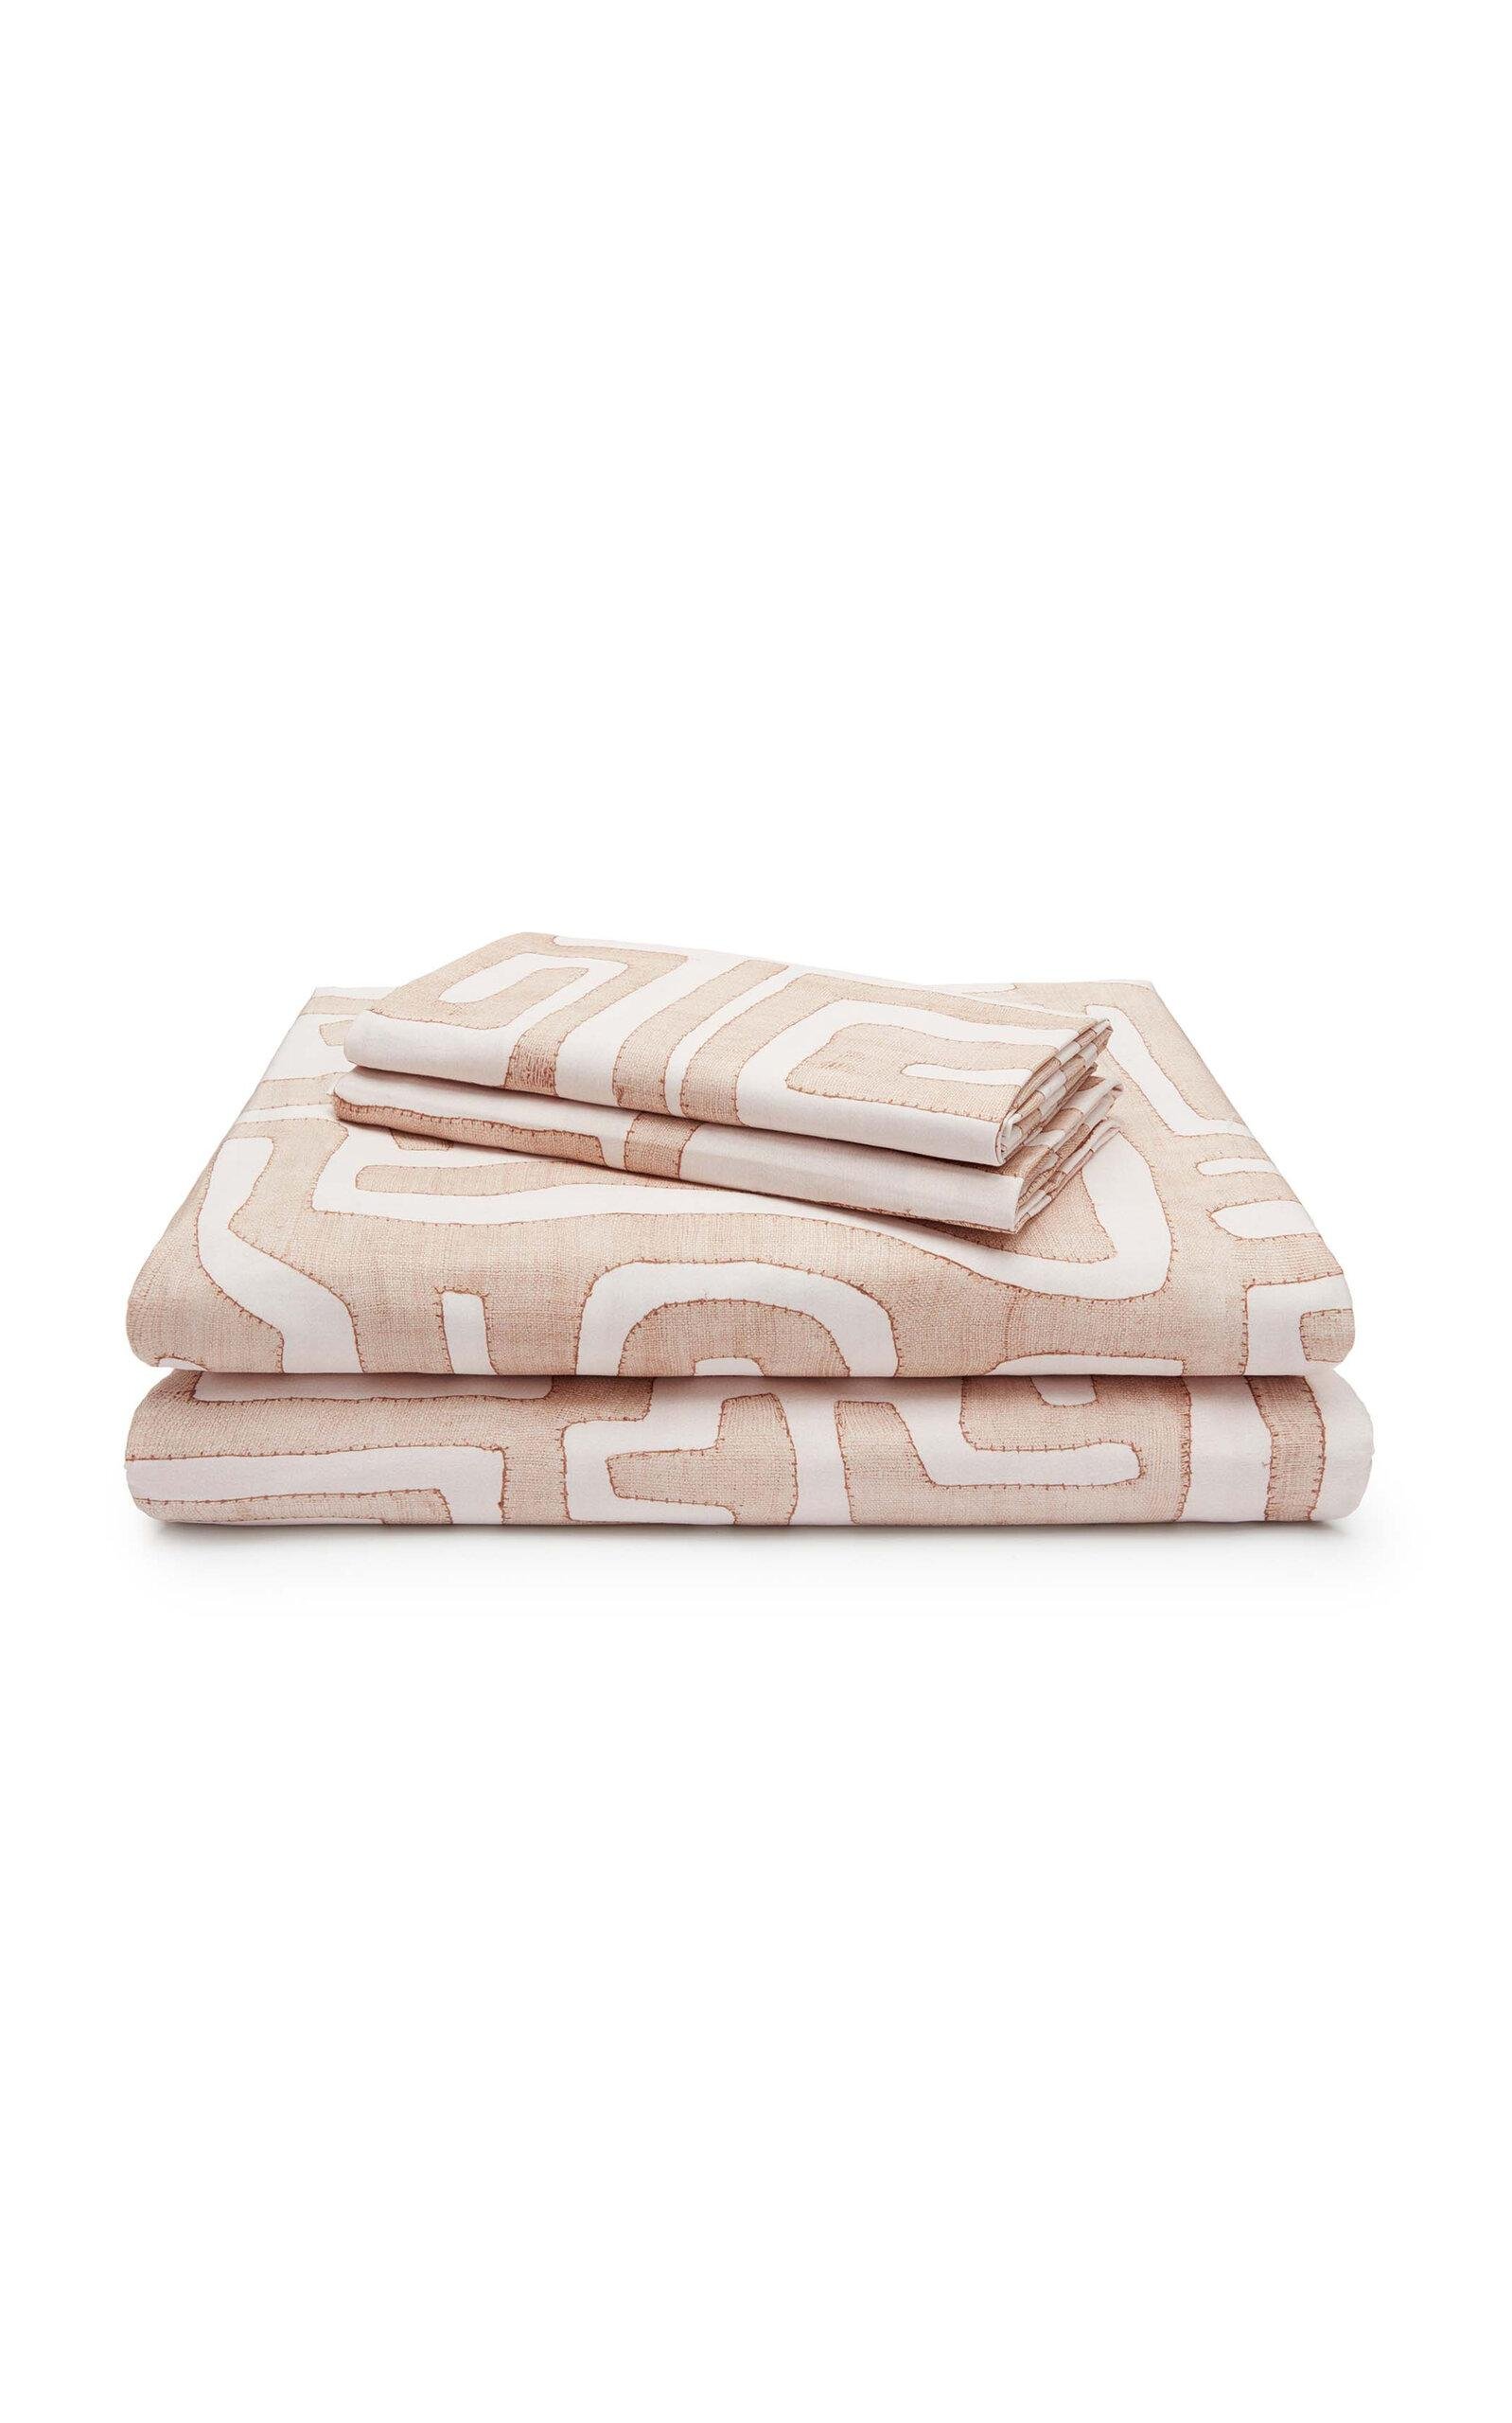 St. Frank - Classic Kuba Cloth Cotton Full/Queen Sheet Set - Light Pink - Moda Operandi by ST. FRANK